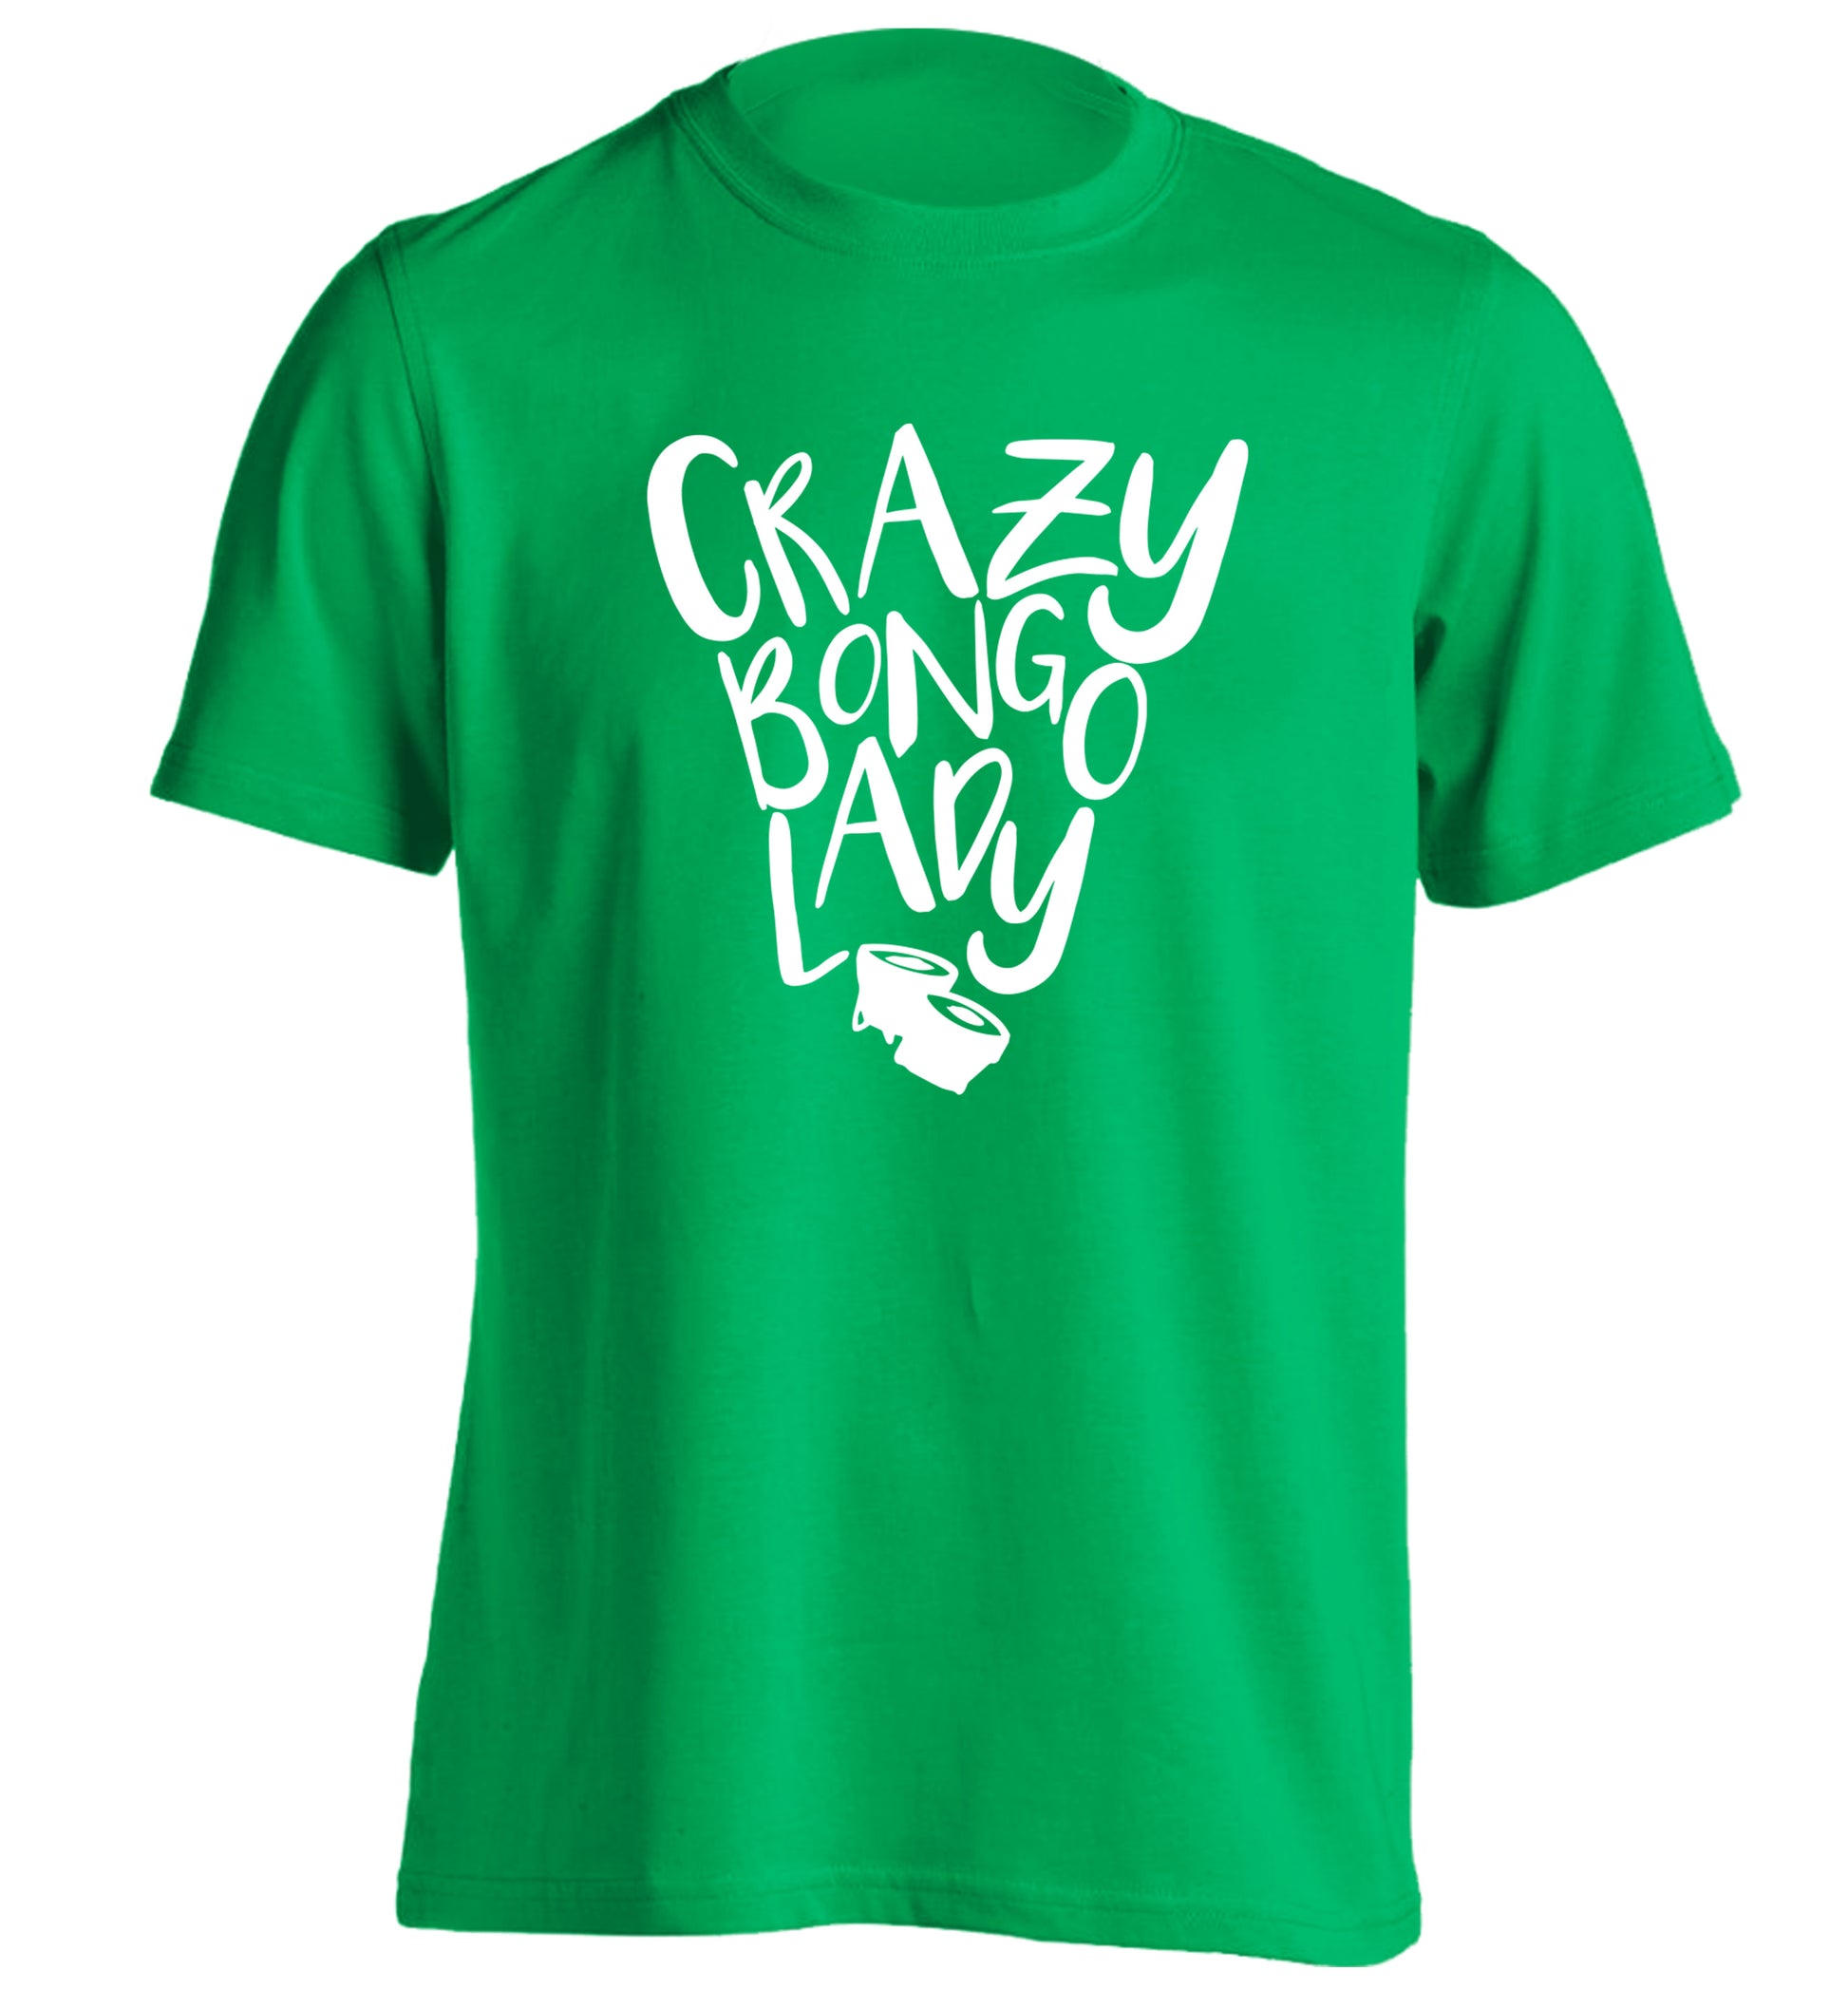 Crazy bongo lady adults unisex green Tshirt 2XL